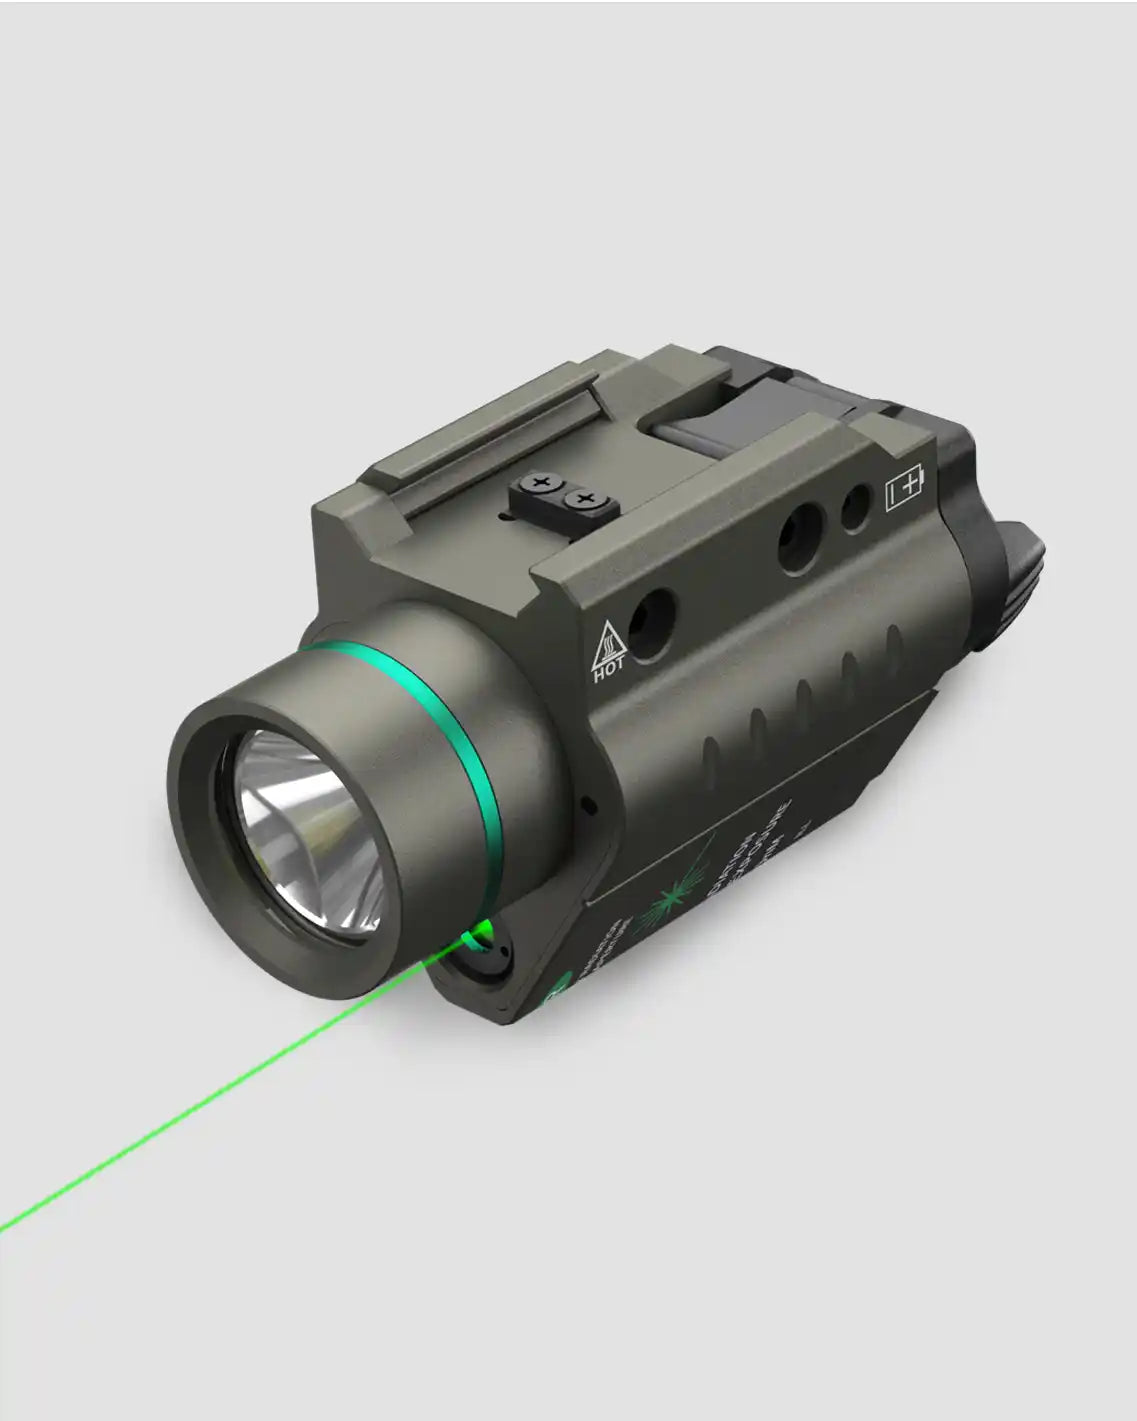 Feyachi GL41 Green Laser Sight - Picatinny Rail Mount